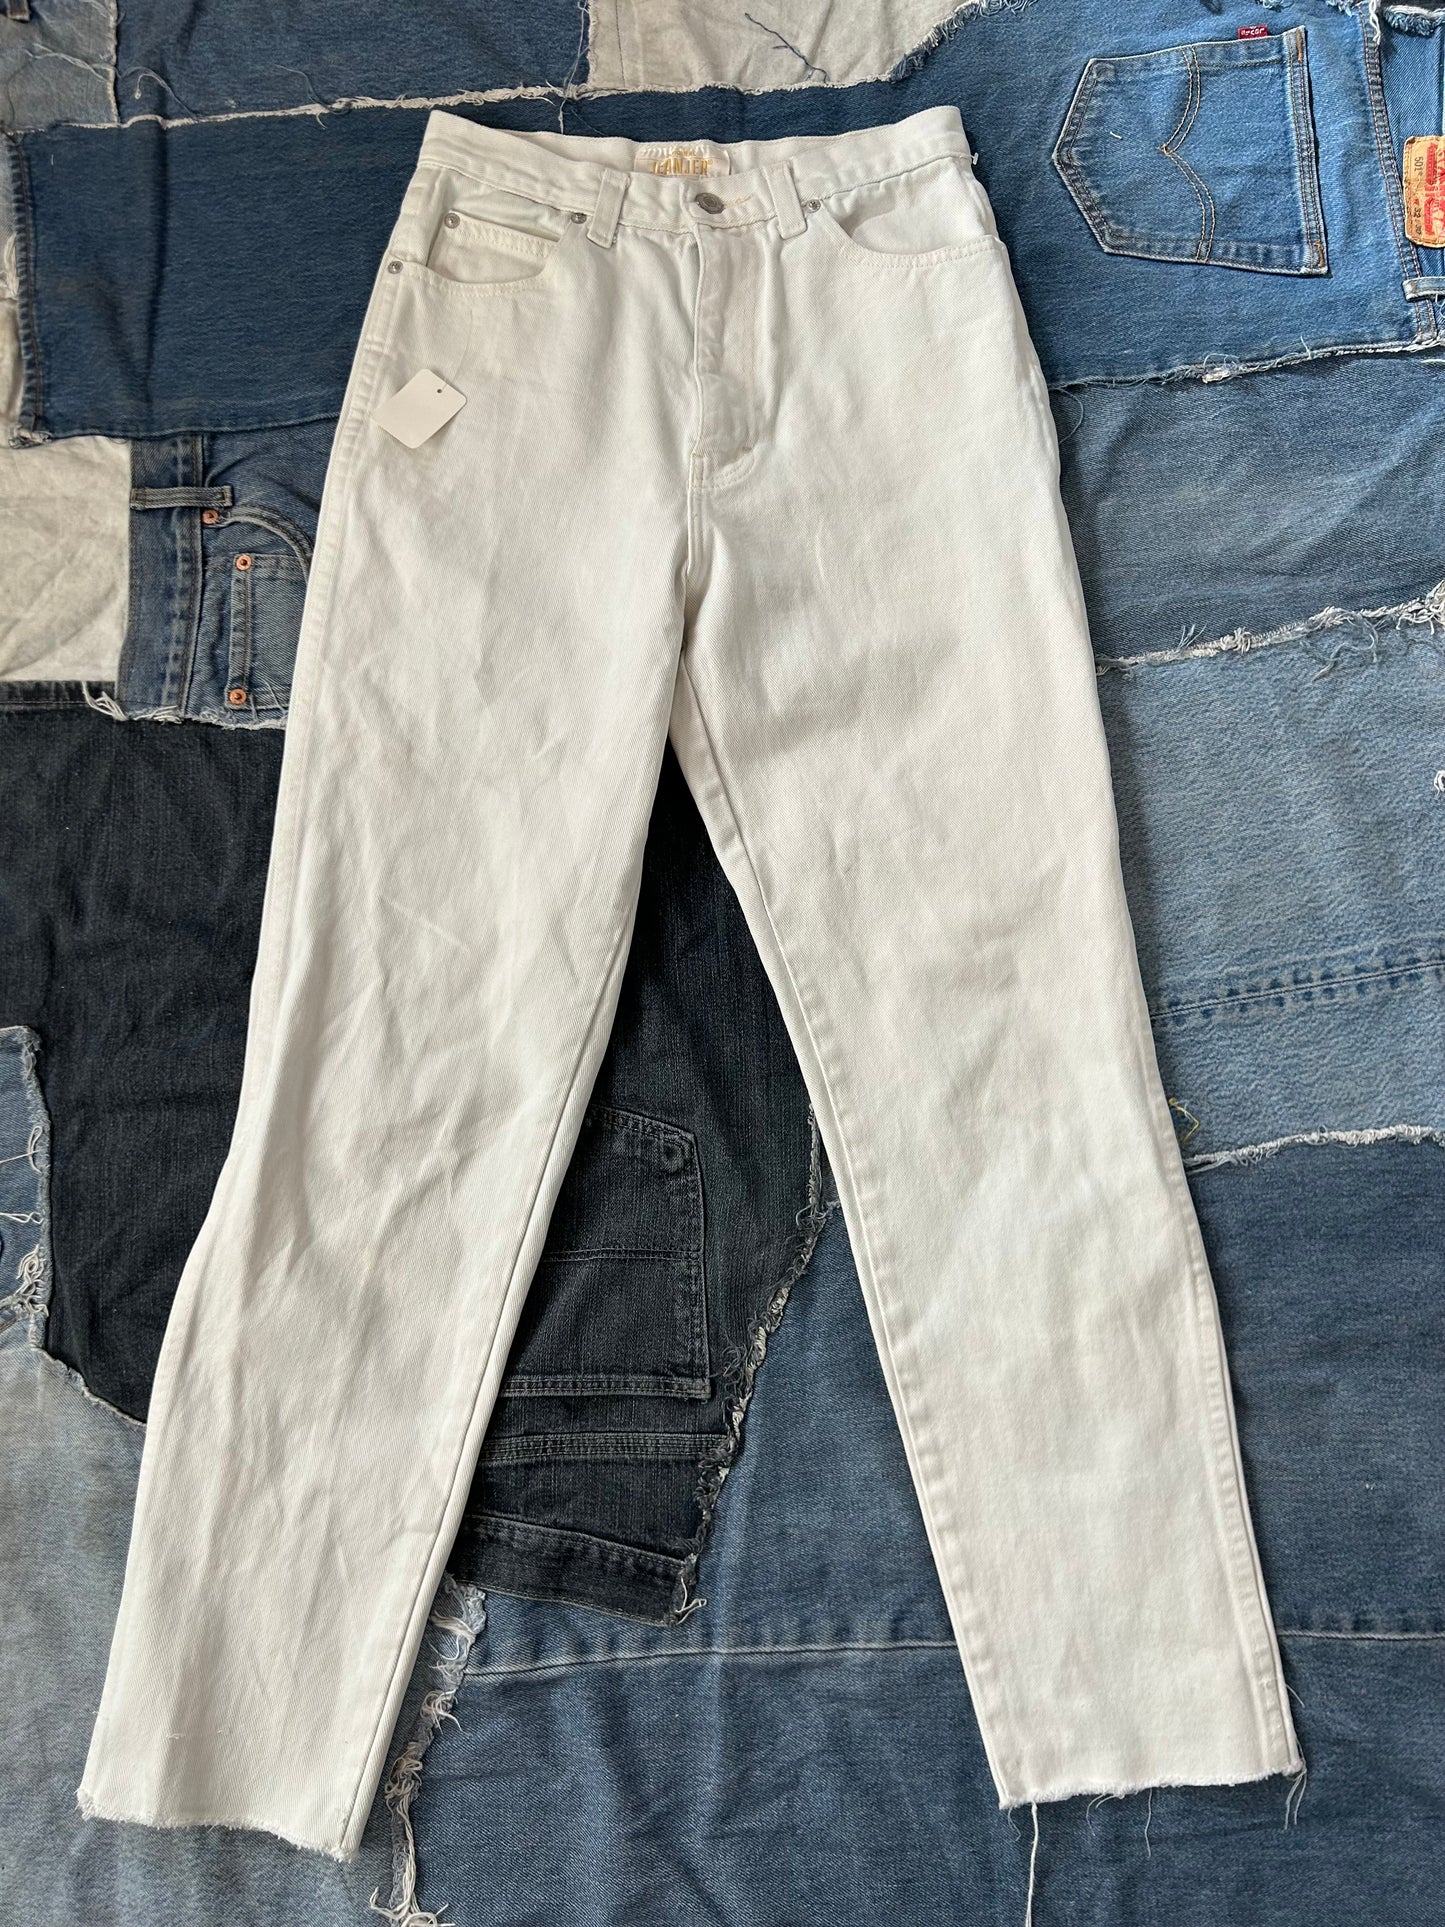 White Vintage Jeans